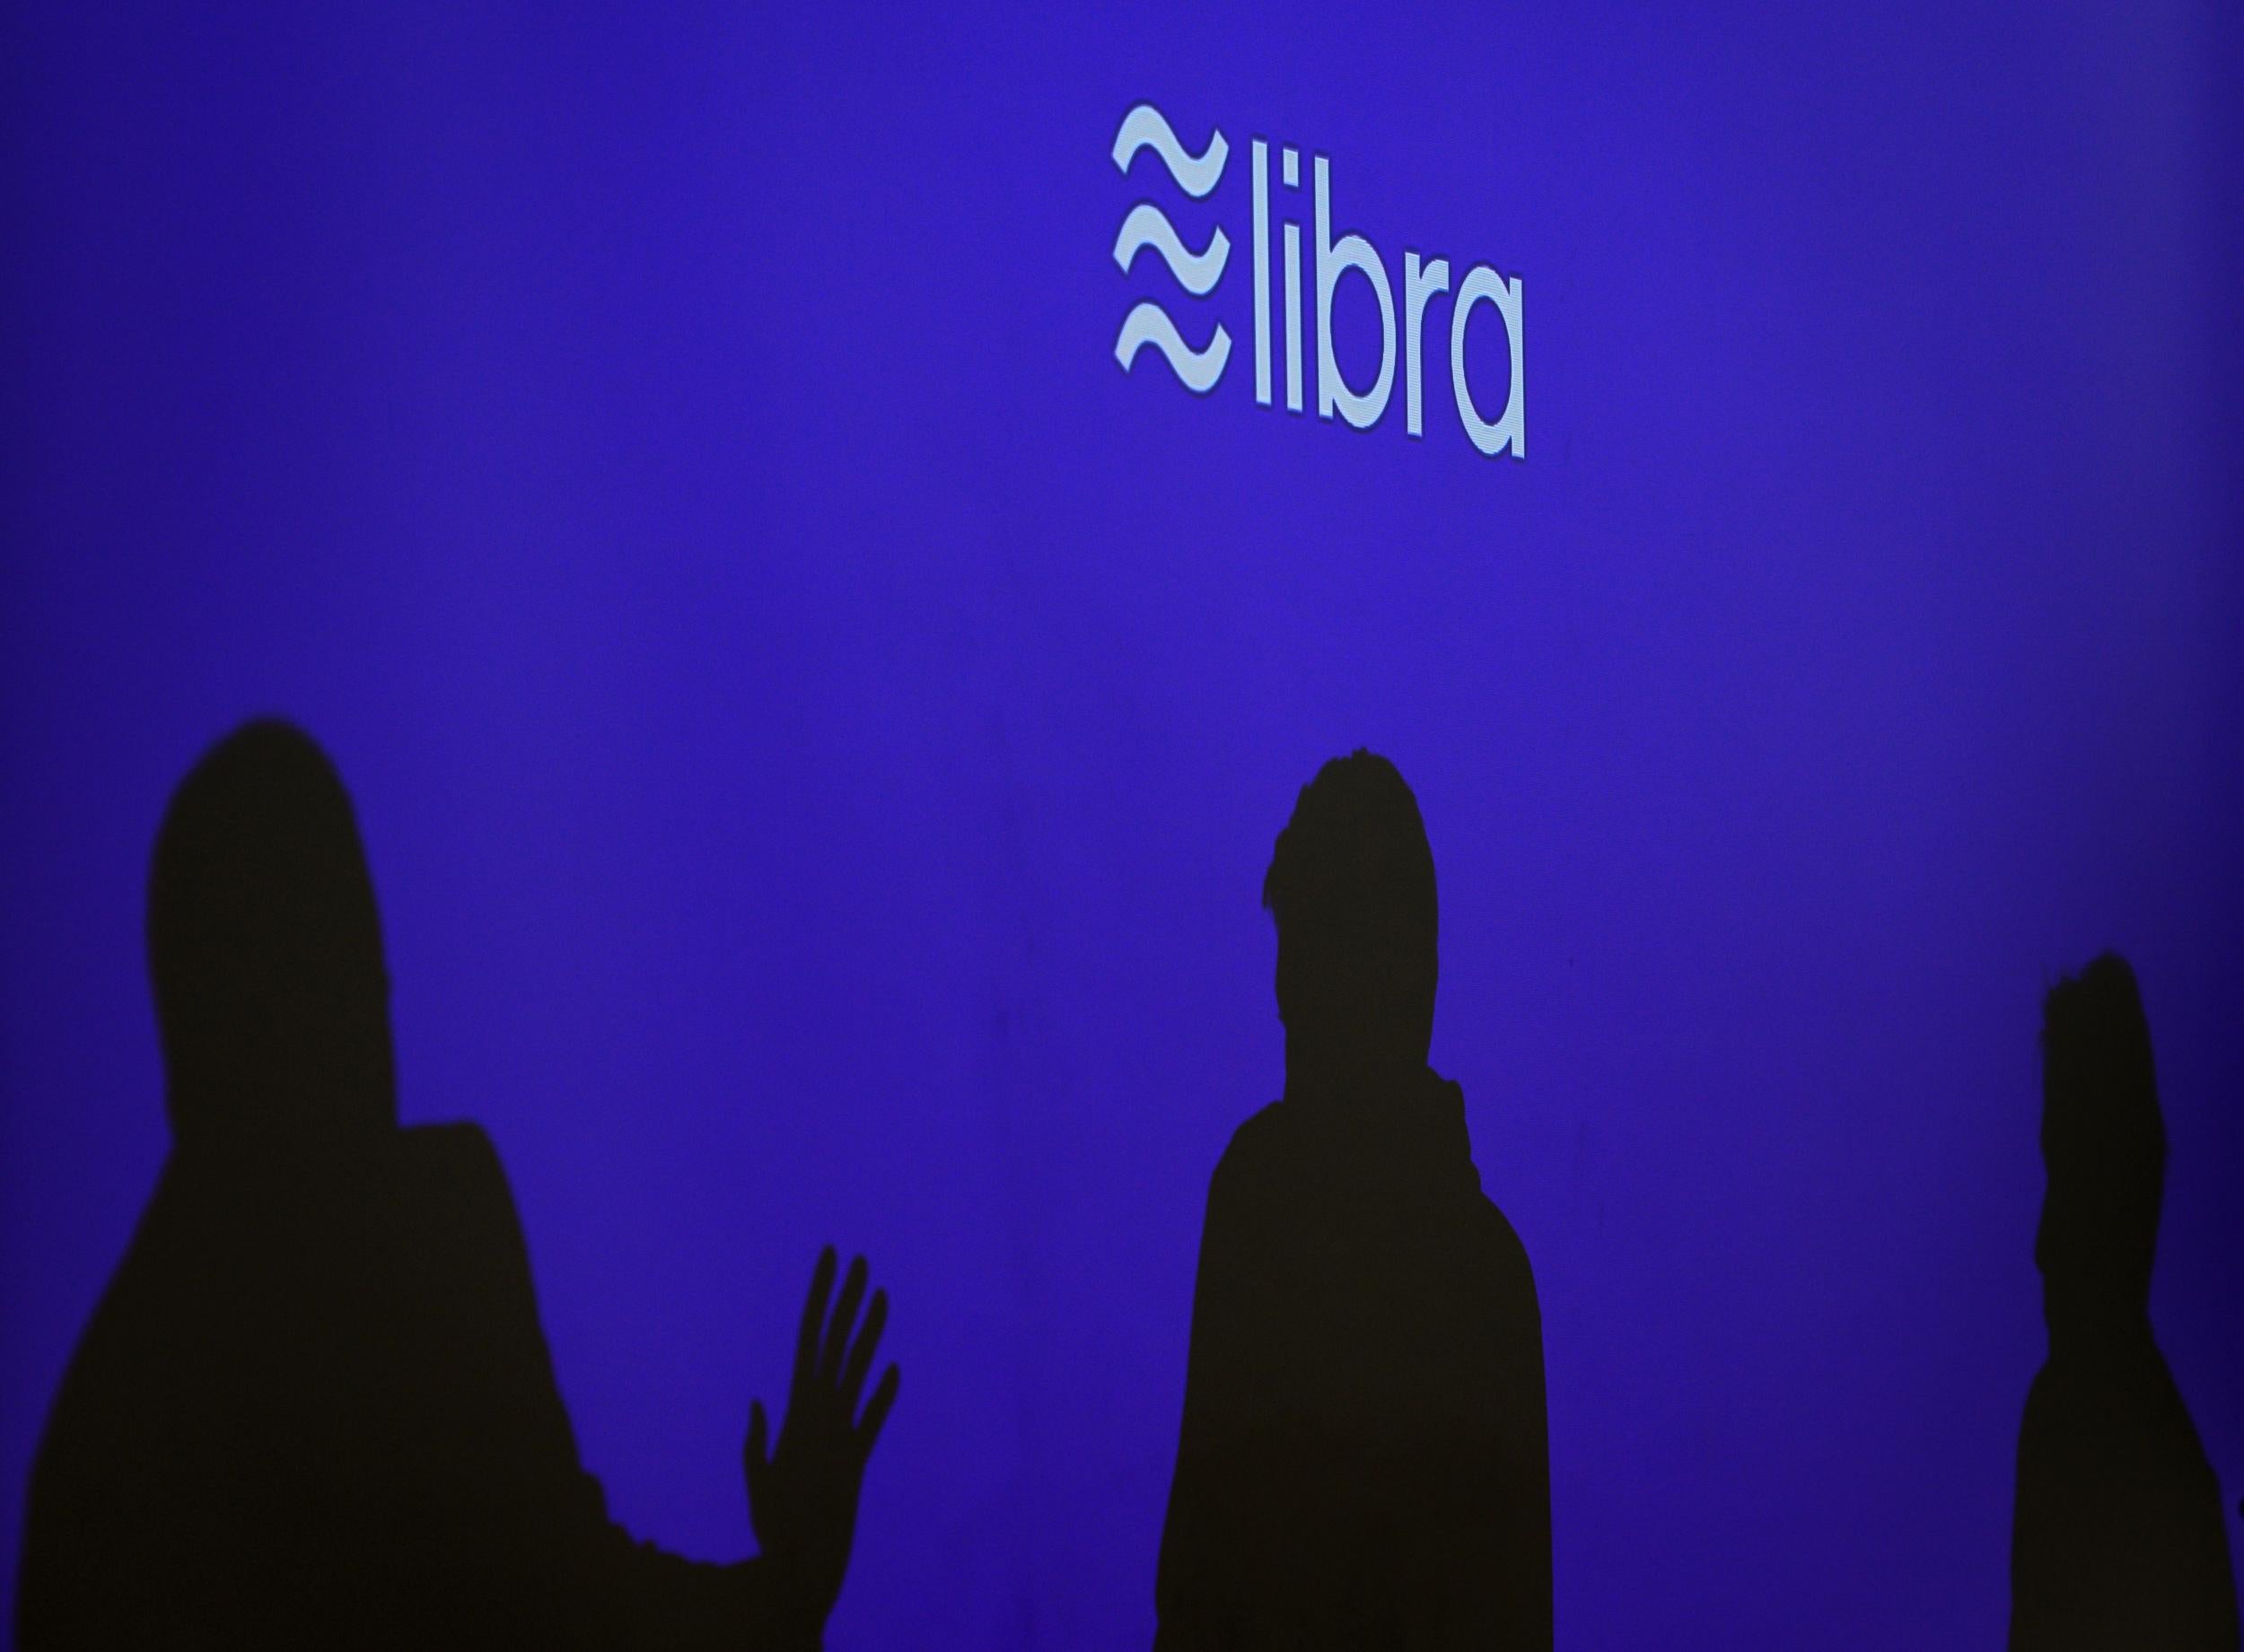 Shadows gather over libra: Facebook’s ‘stablecoin’ cryptocurrency